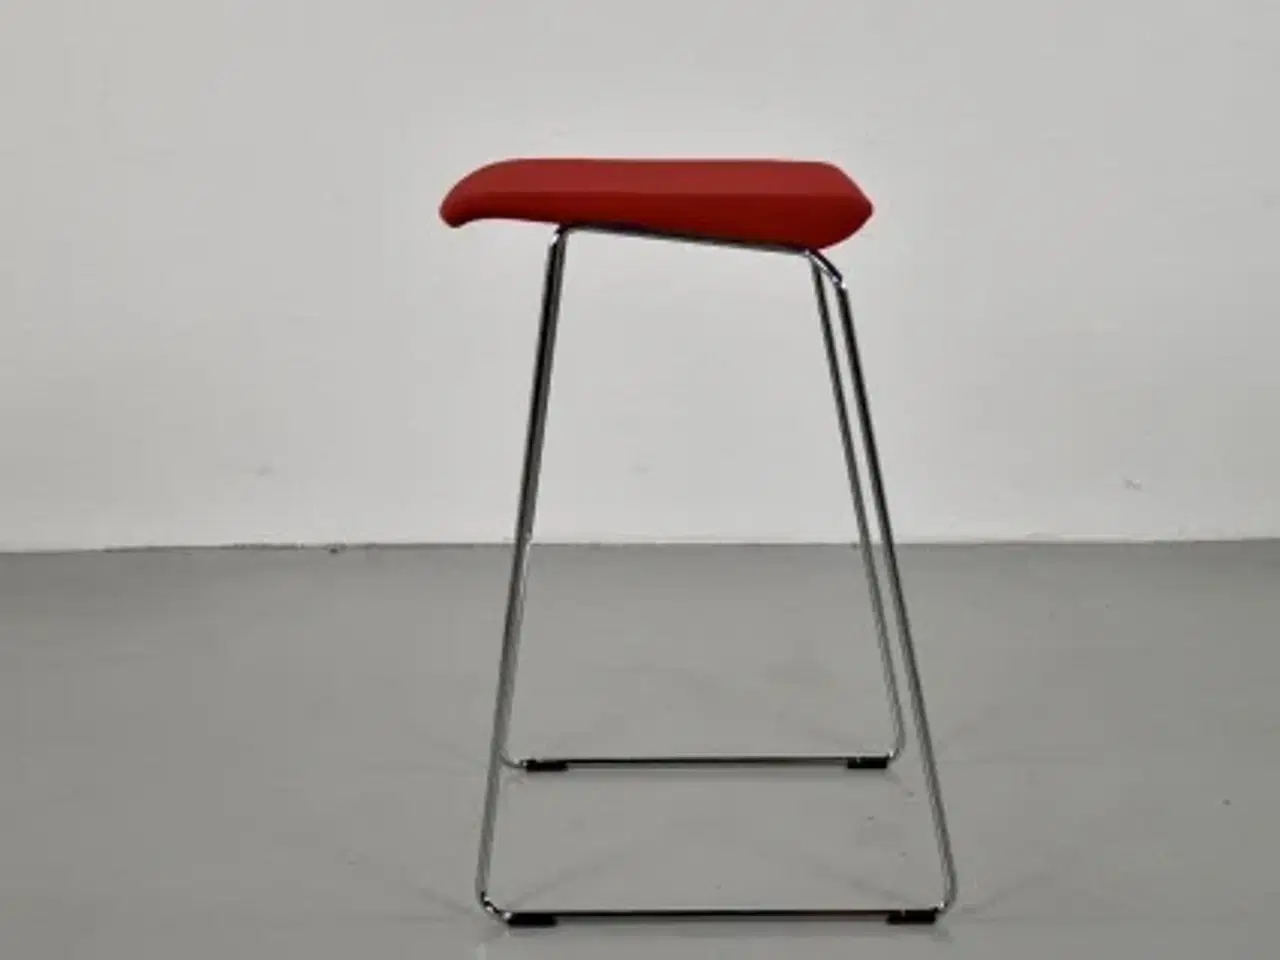 Billede 4 - Savir gate barstol med rødt polster på sædet og på krom stel